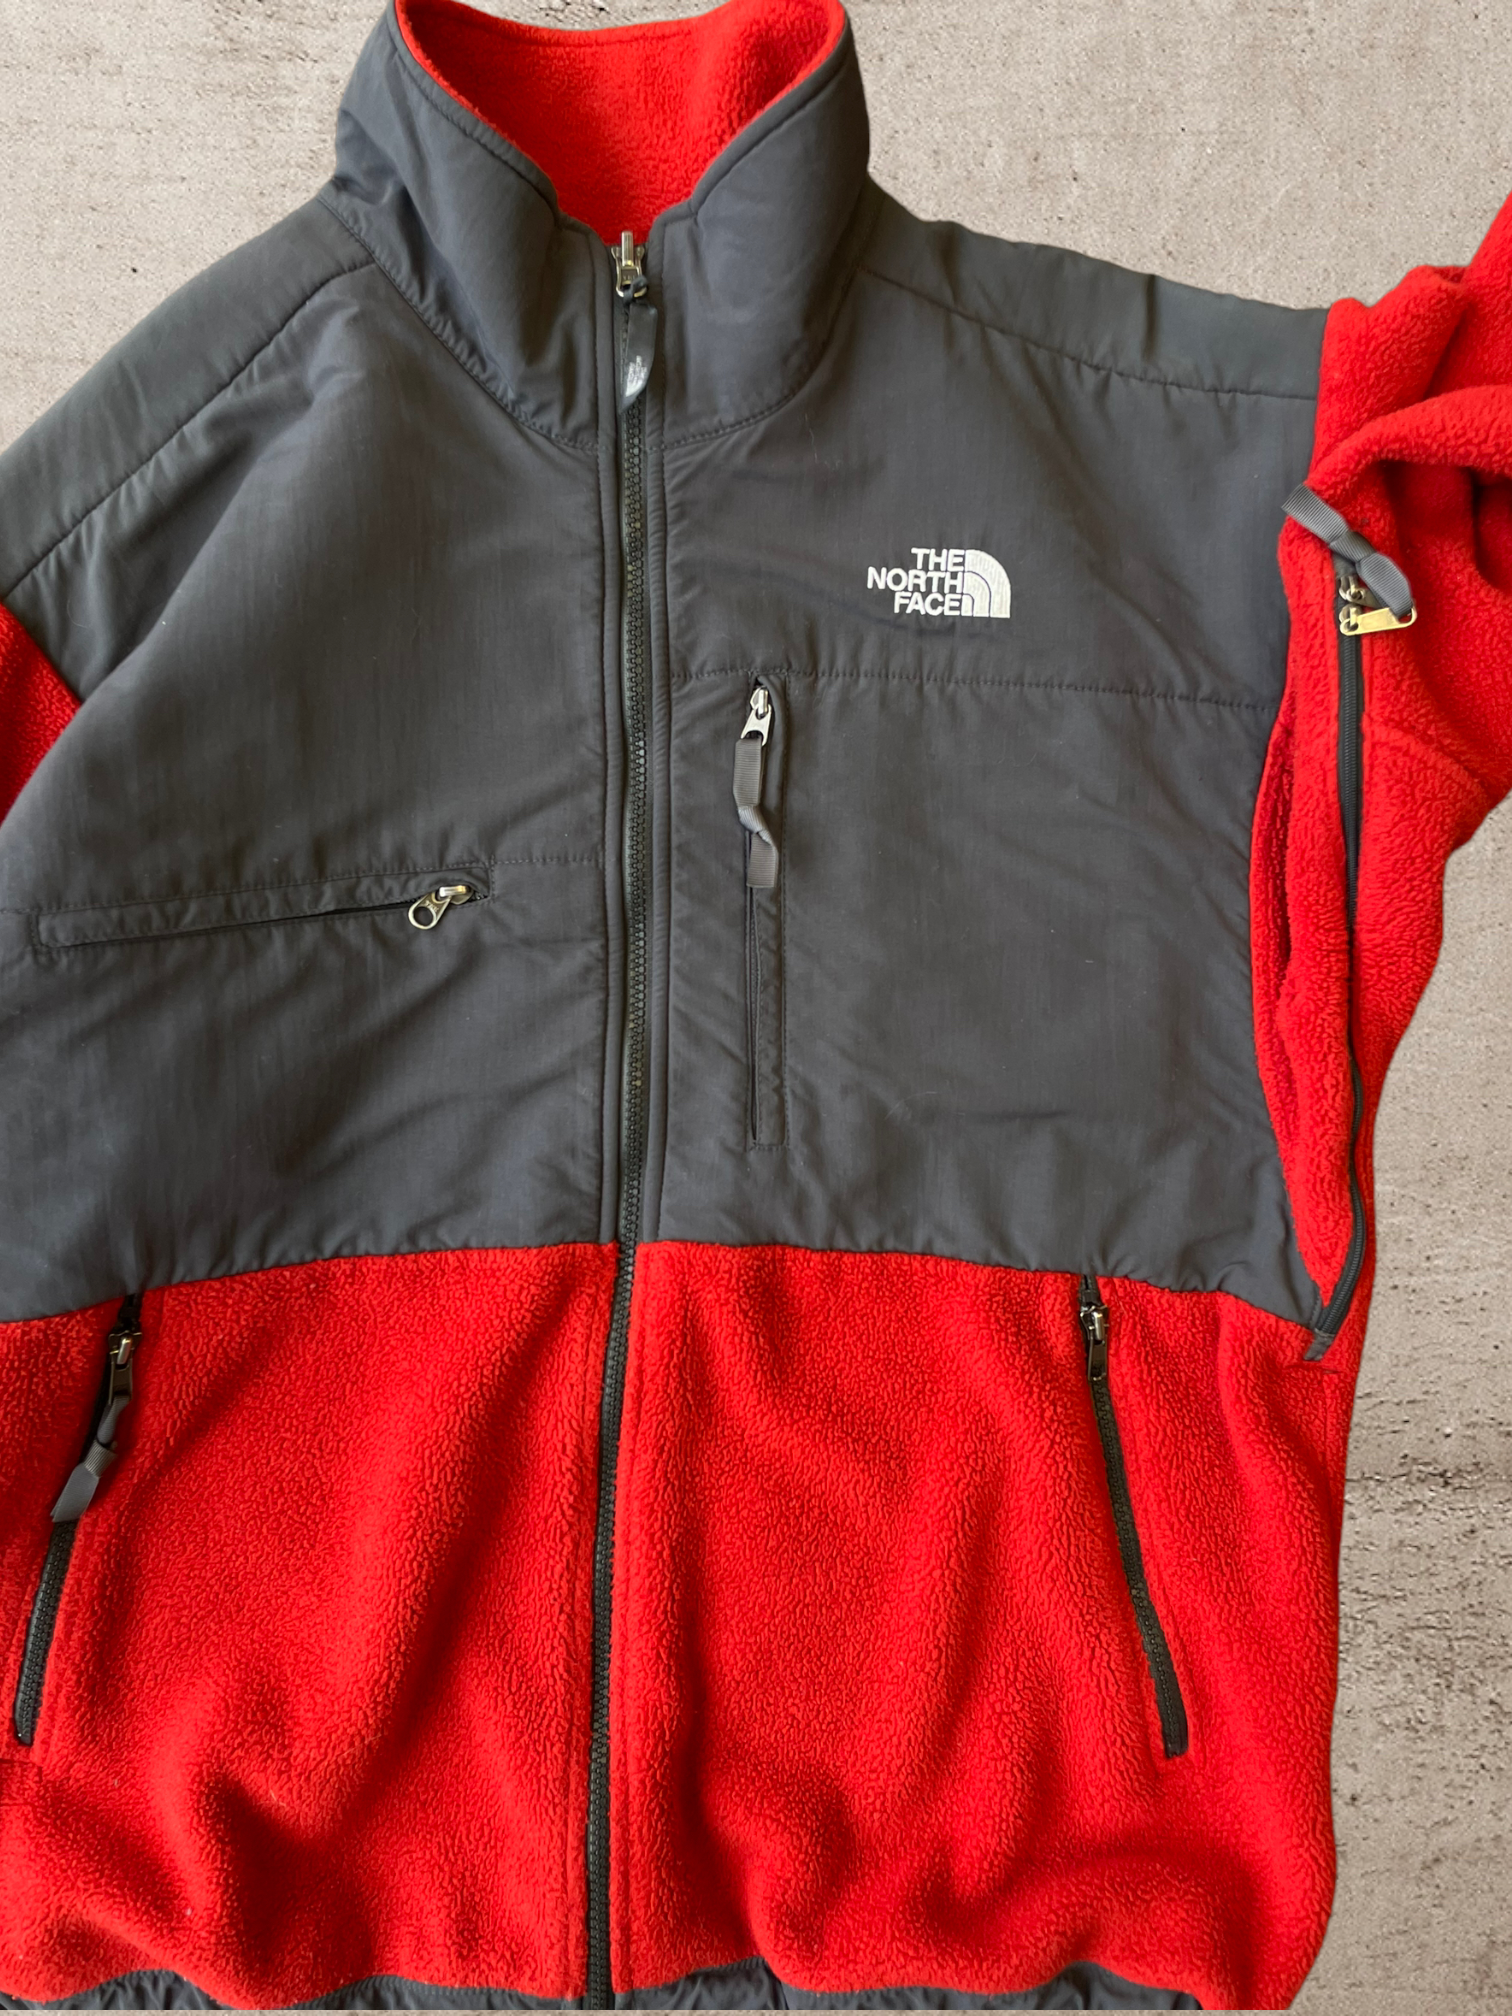 North Face Fleece Zip up Jacket - X-Large